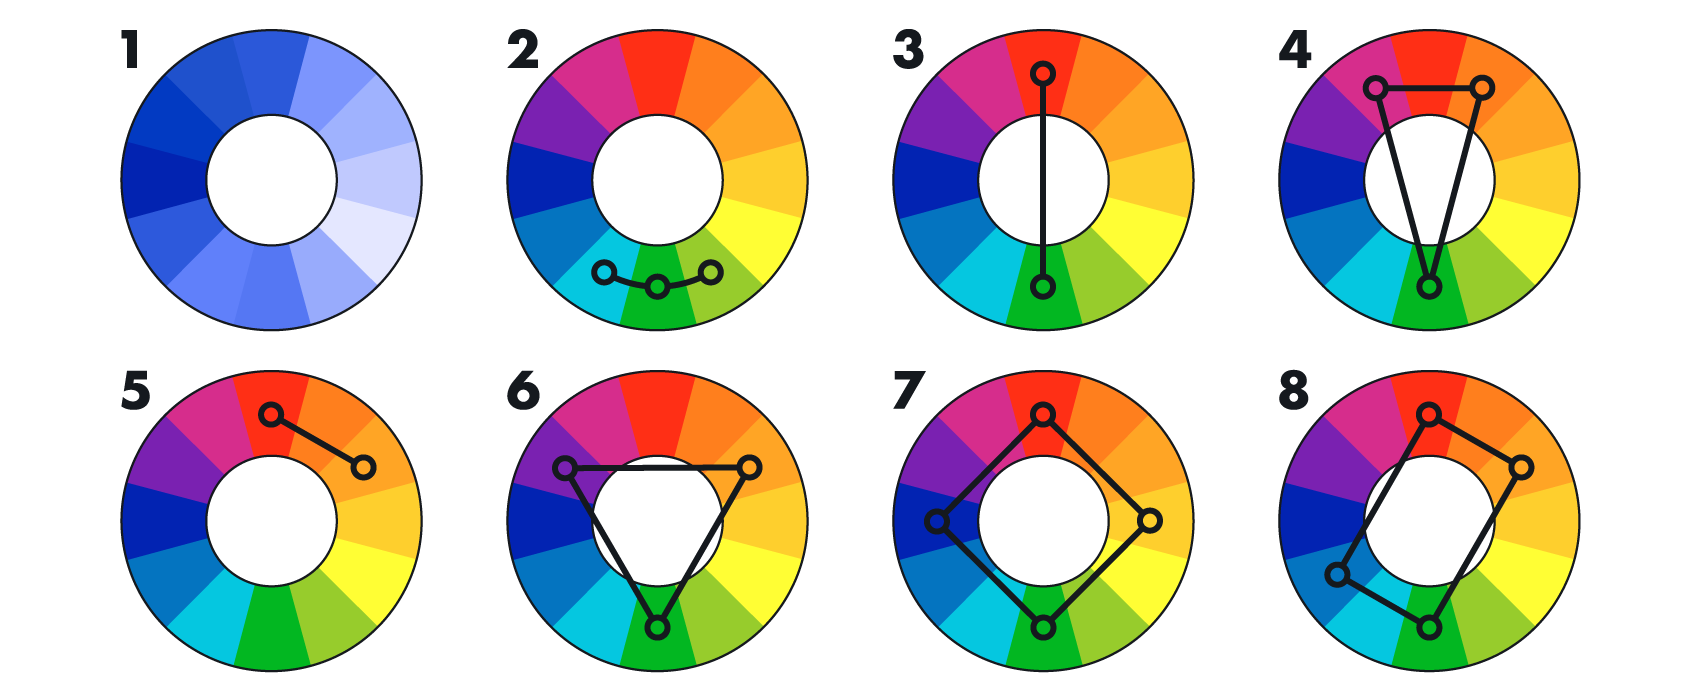 Johannes Itten’s 12-part color wheel